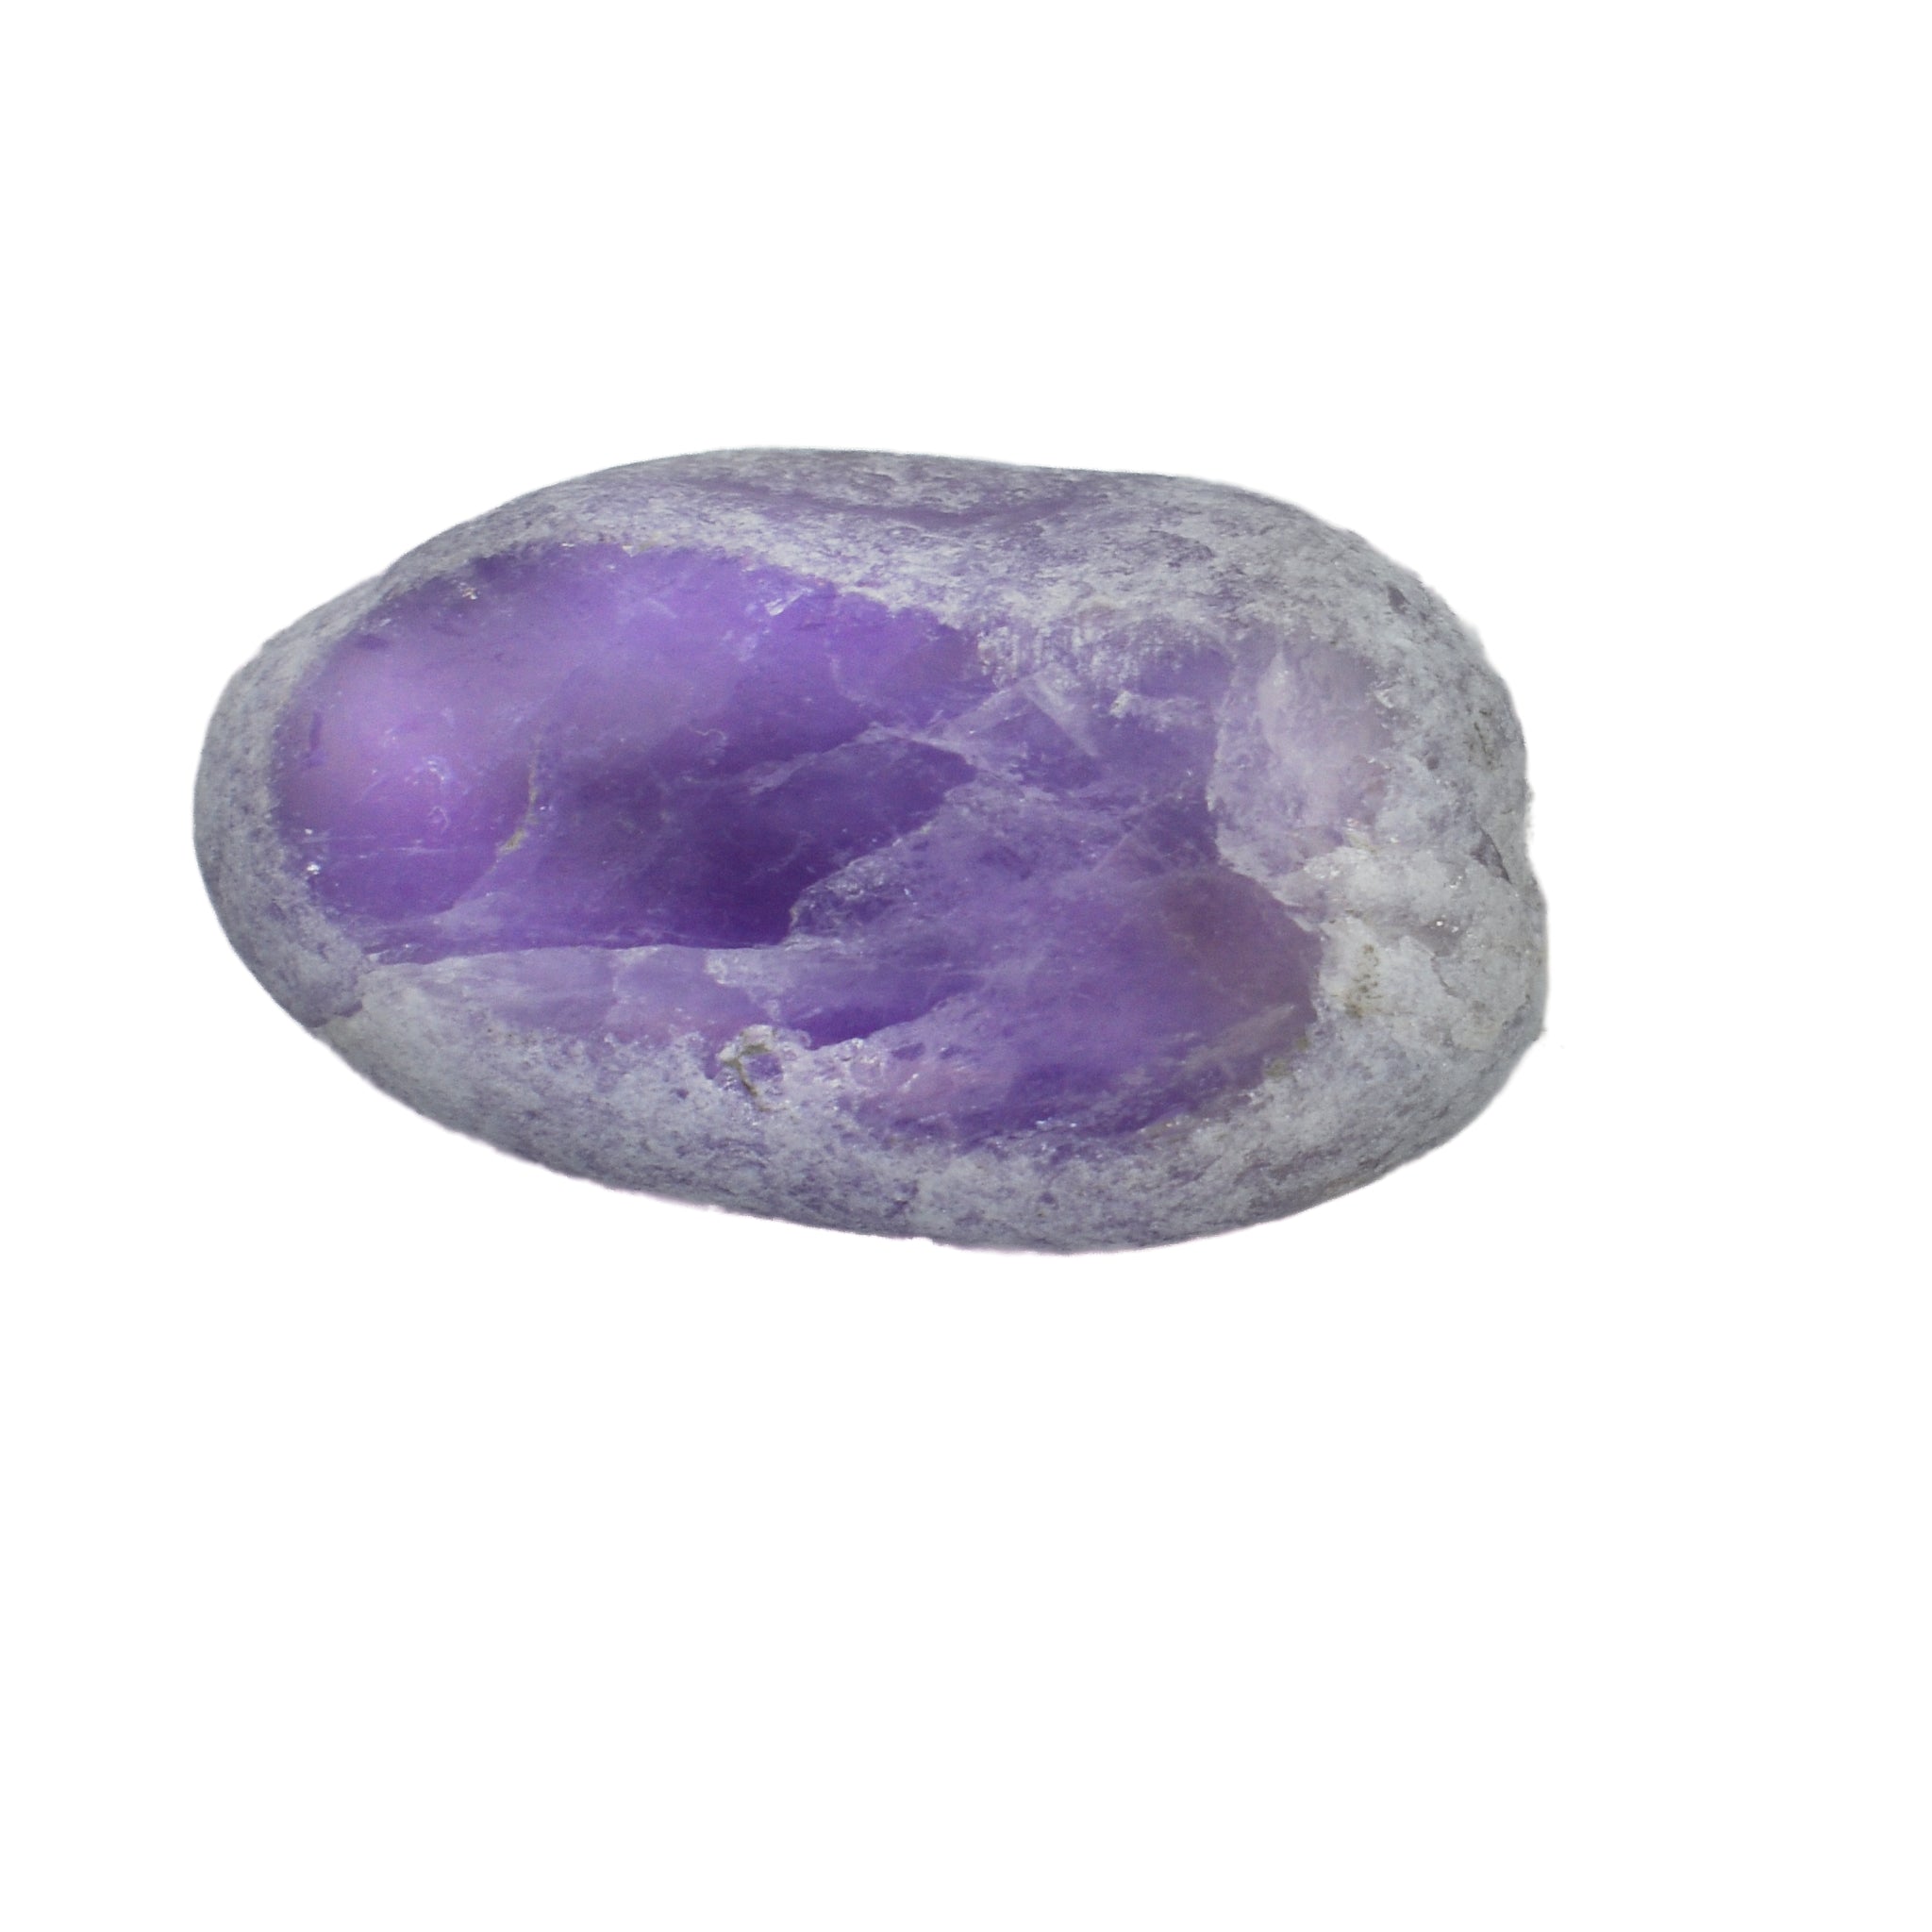 Oblong purple crystal 